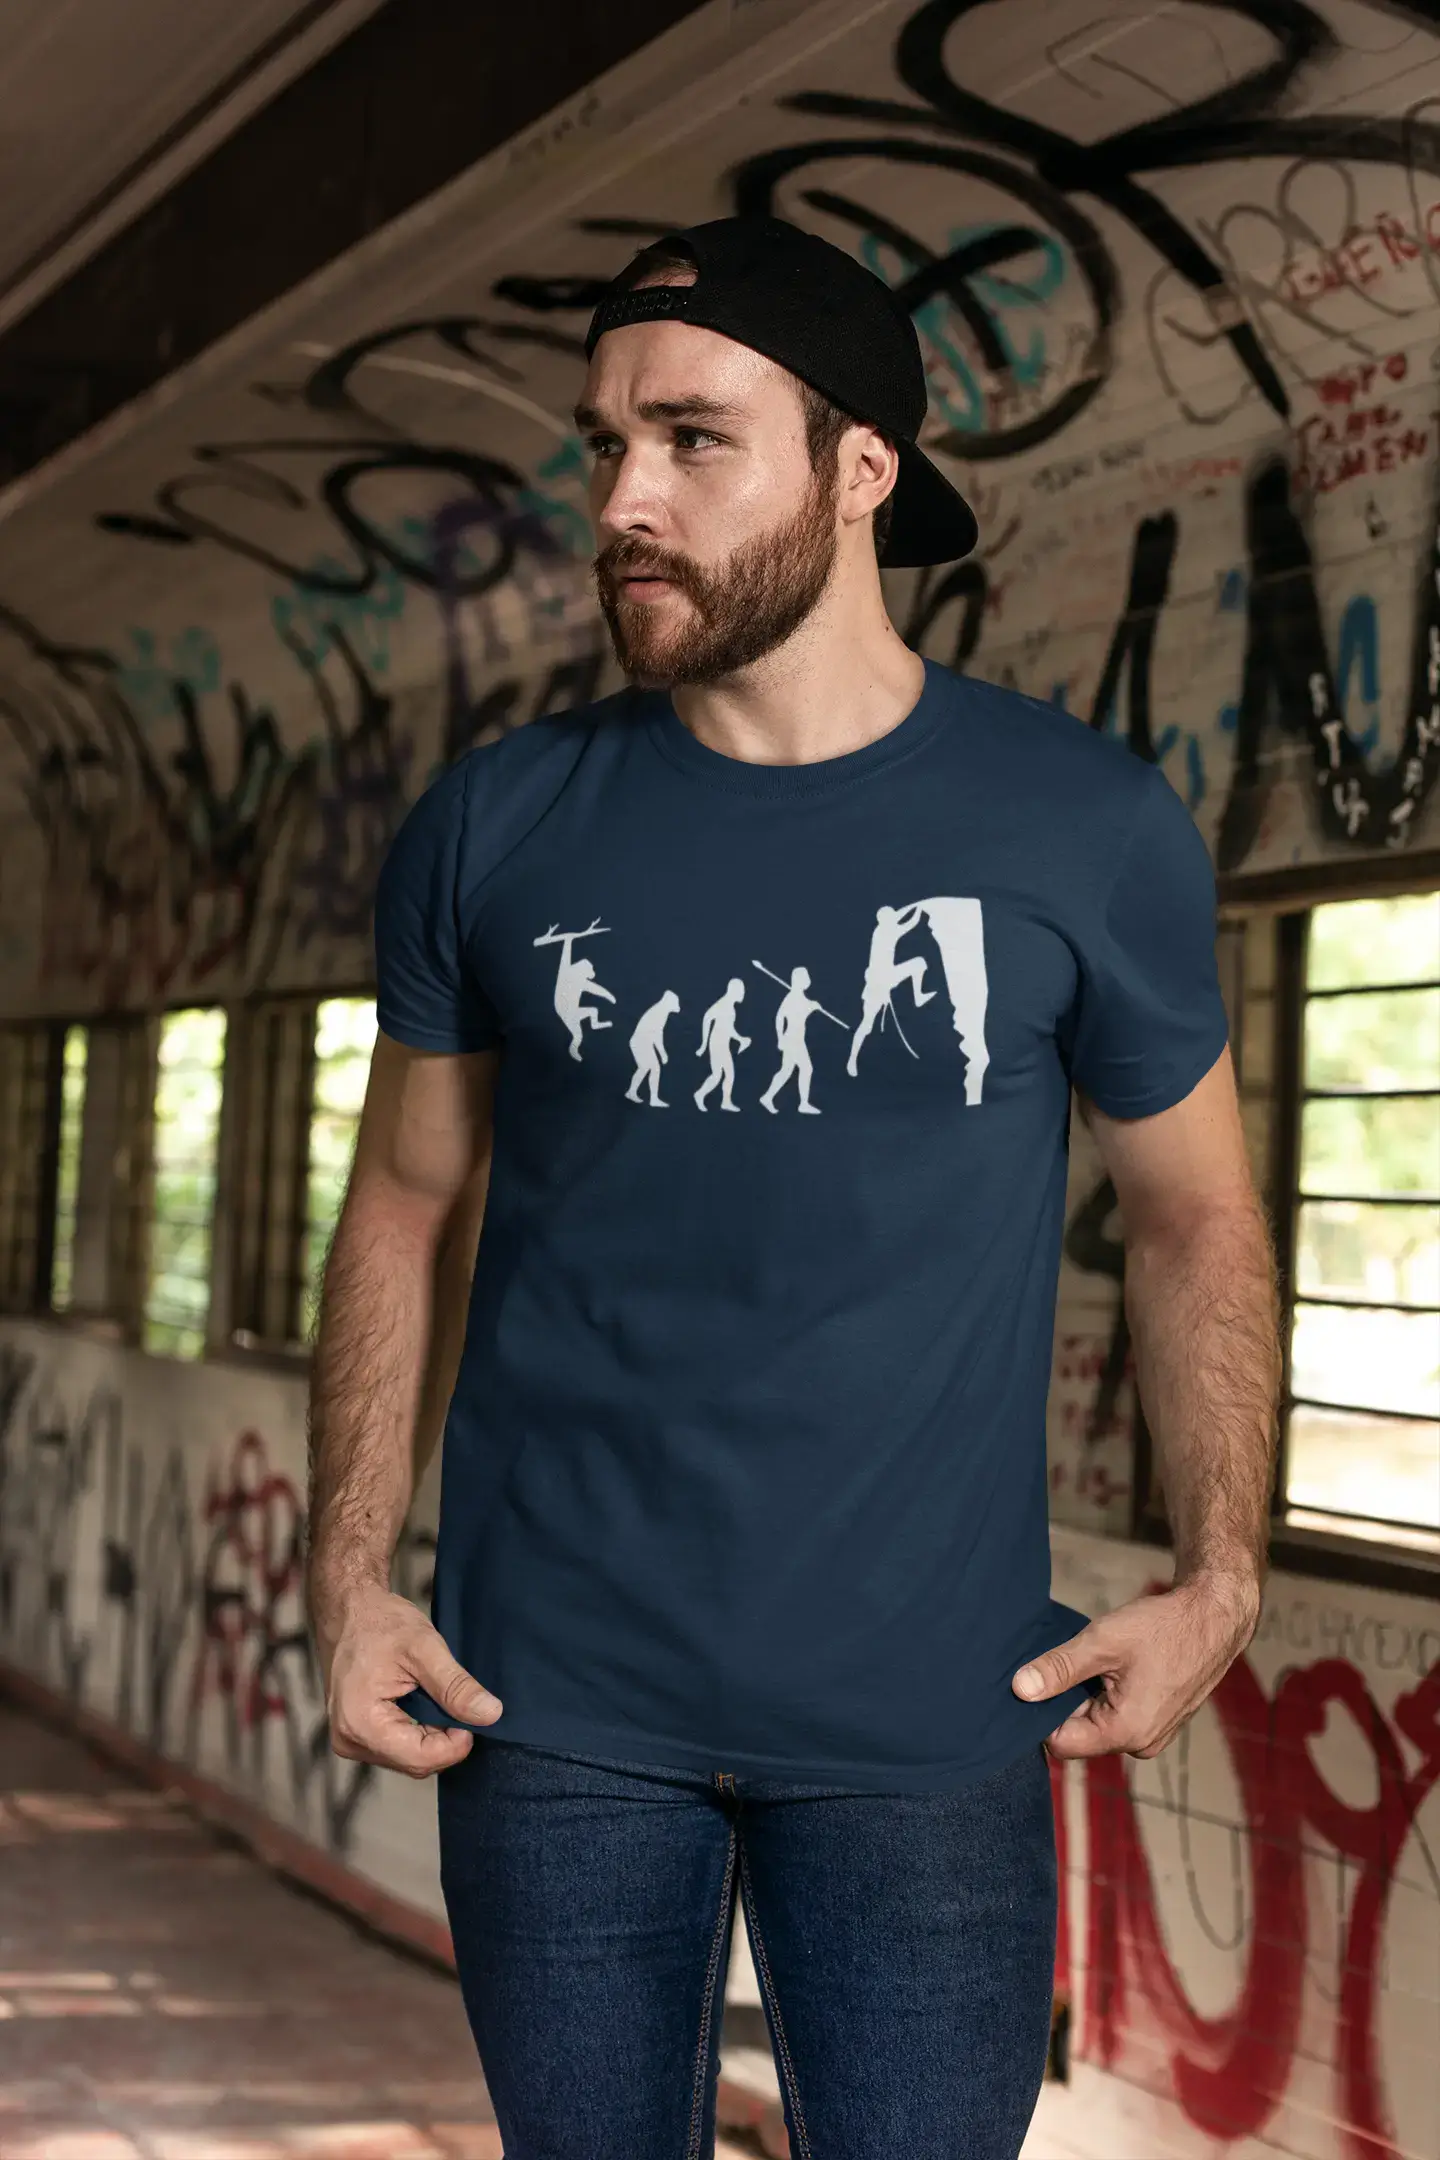 ULTRABASIC - Graphic Printed Men's Climbing Evolution T-Shirt Mouse Grey